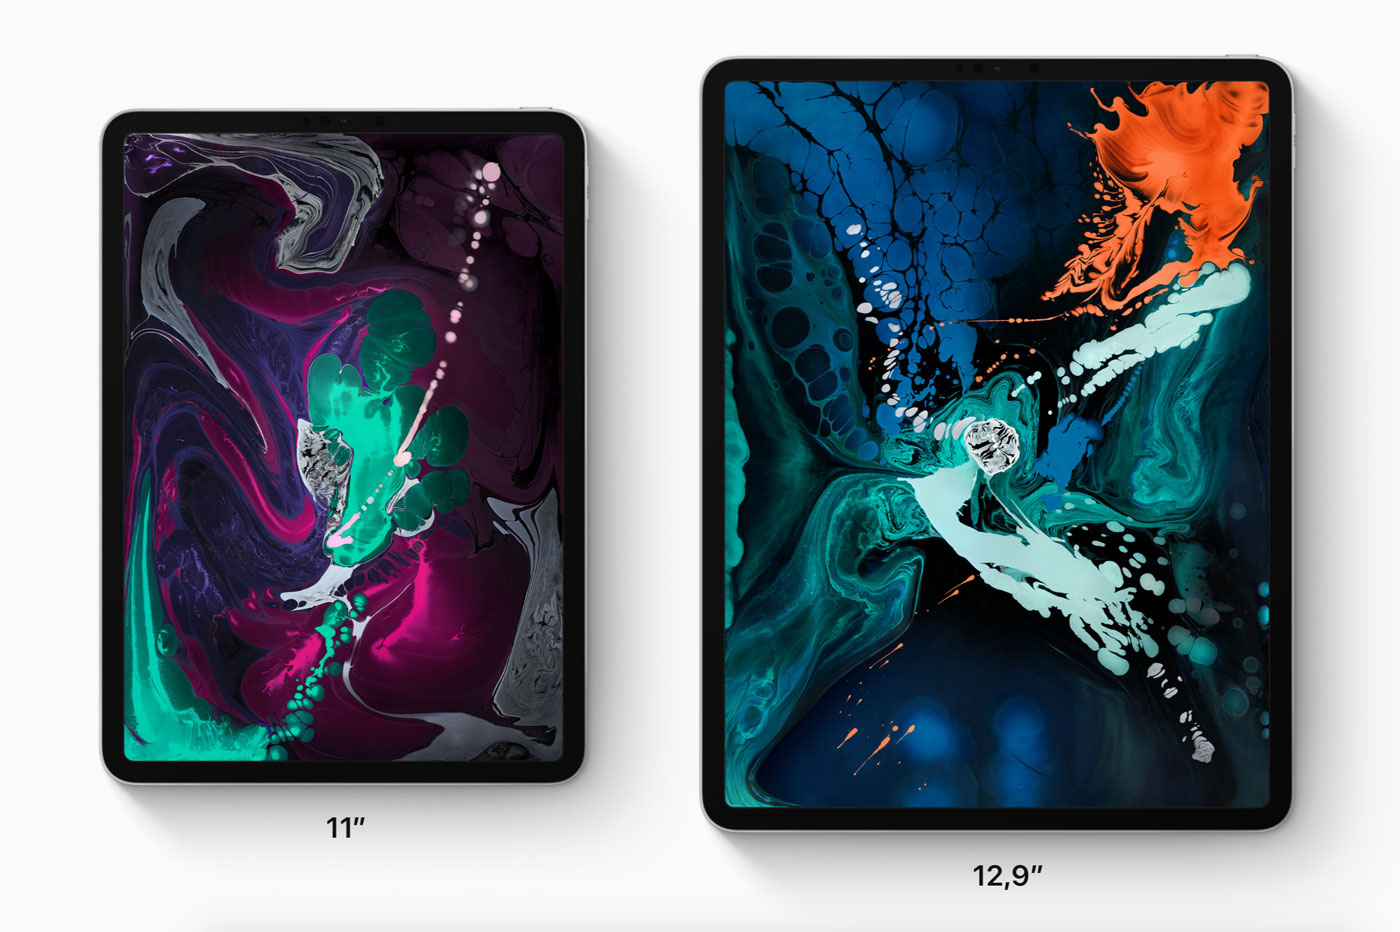 Où acheter un iPad Pro 2018 11 "/ 12.9" au meilleur prix?